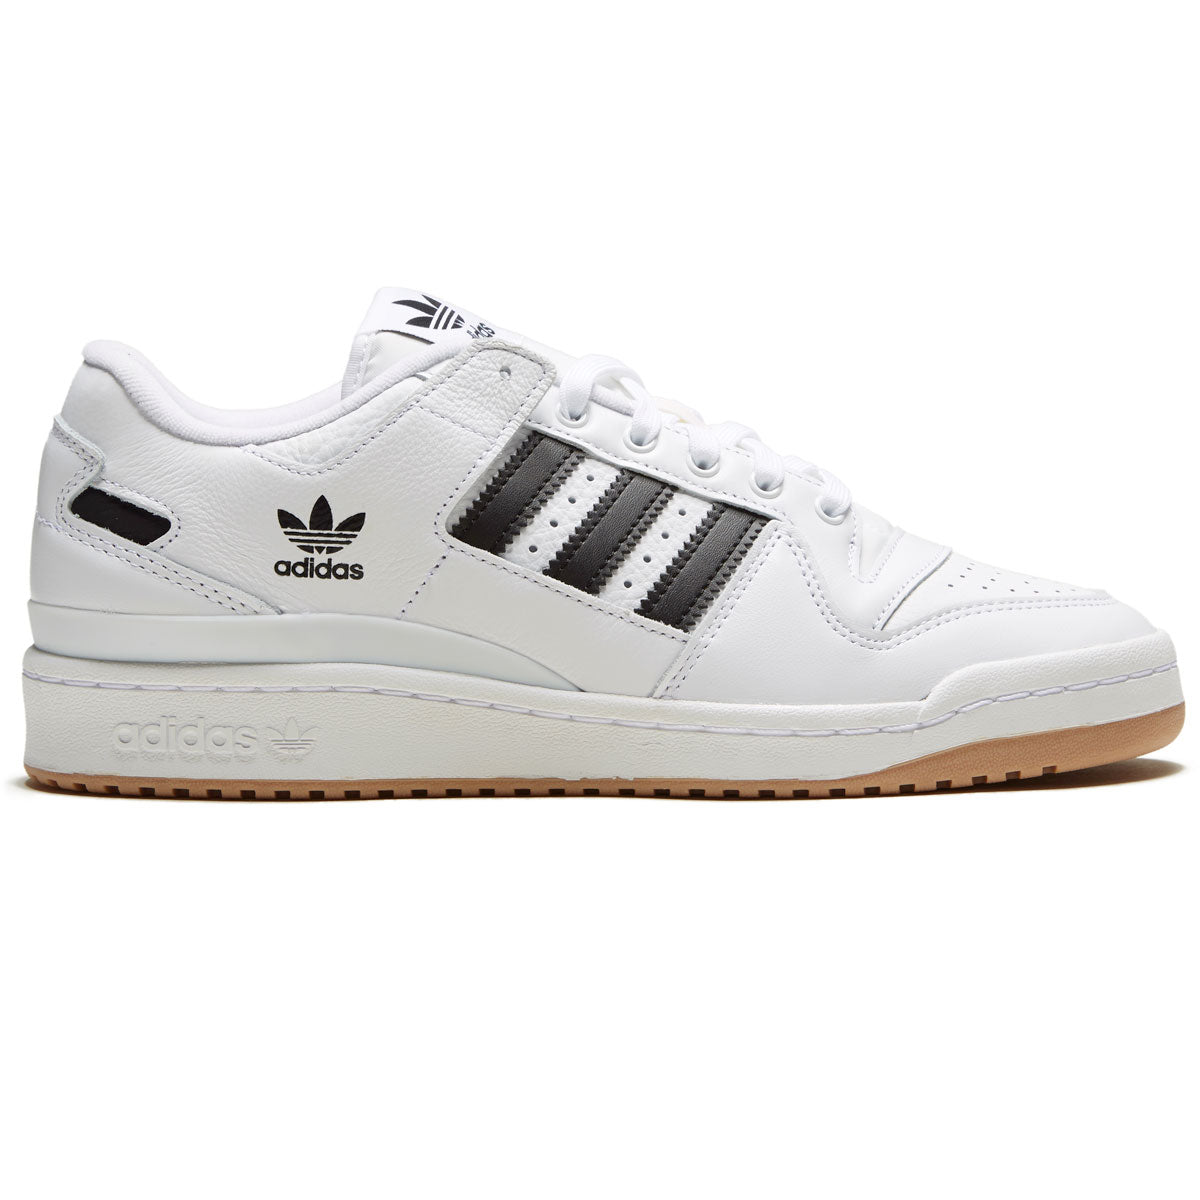 Adidas Forum 84 Low ADV Shoes - White/Core Black/White image 1